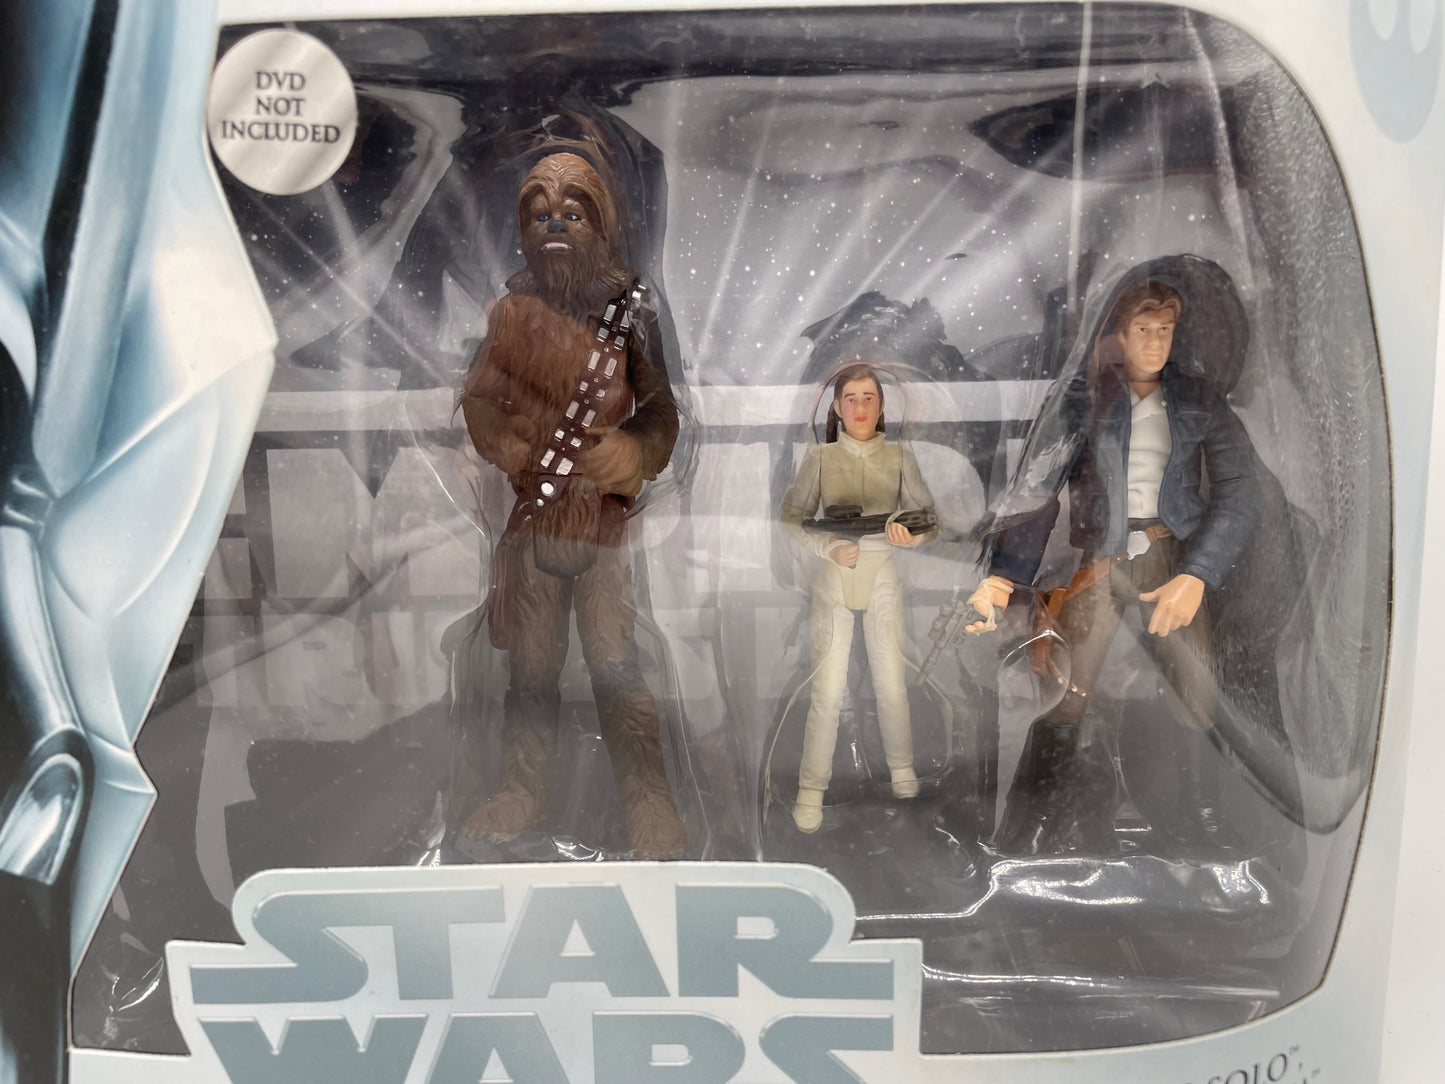 Empire Strikes Back Chewbacca, Leia & Han Solo Figure DVD Set, Hasbro 2004